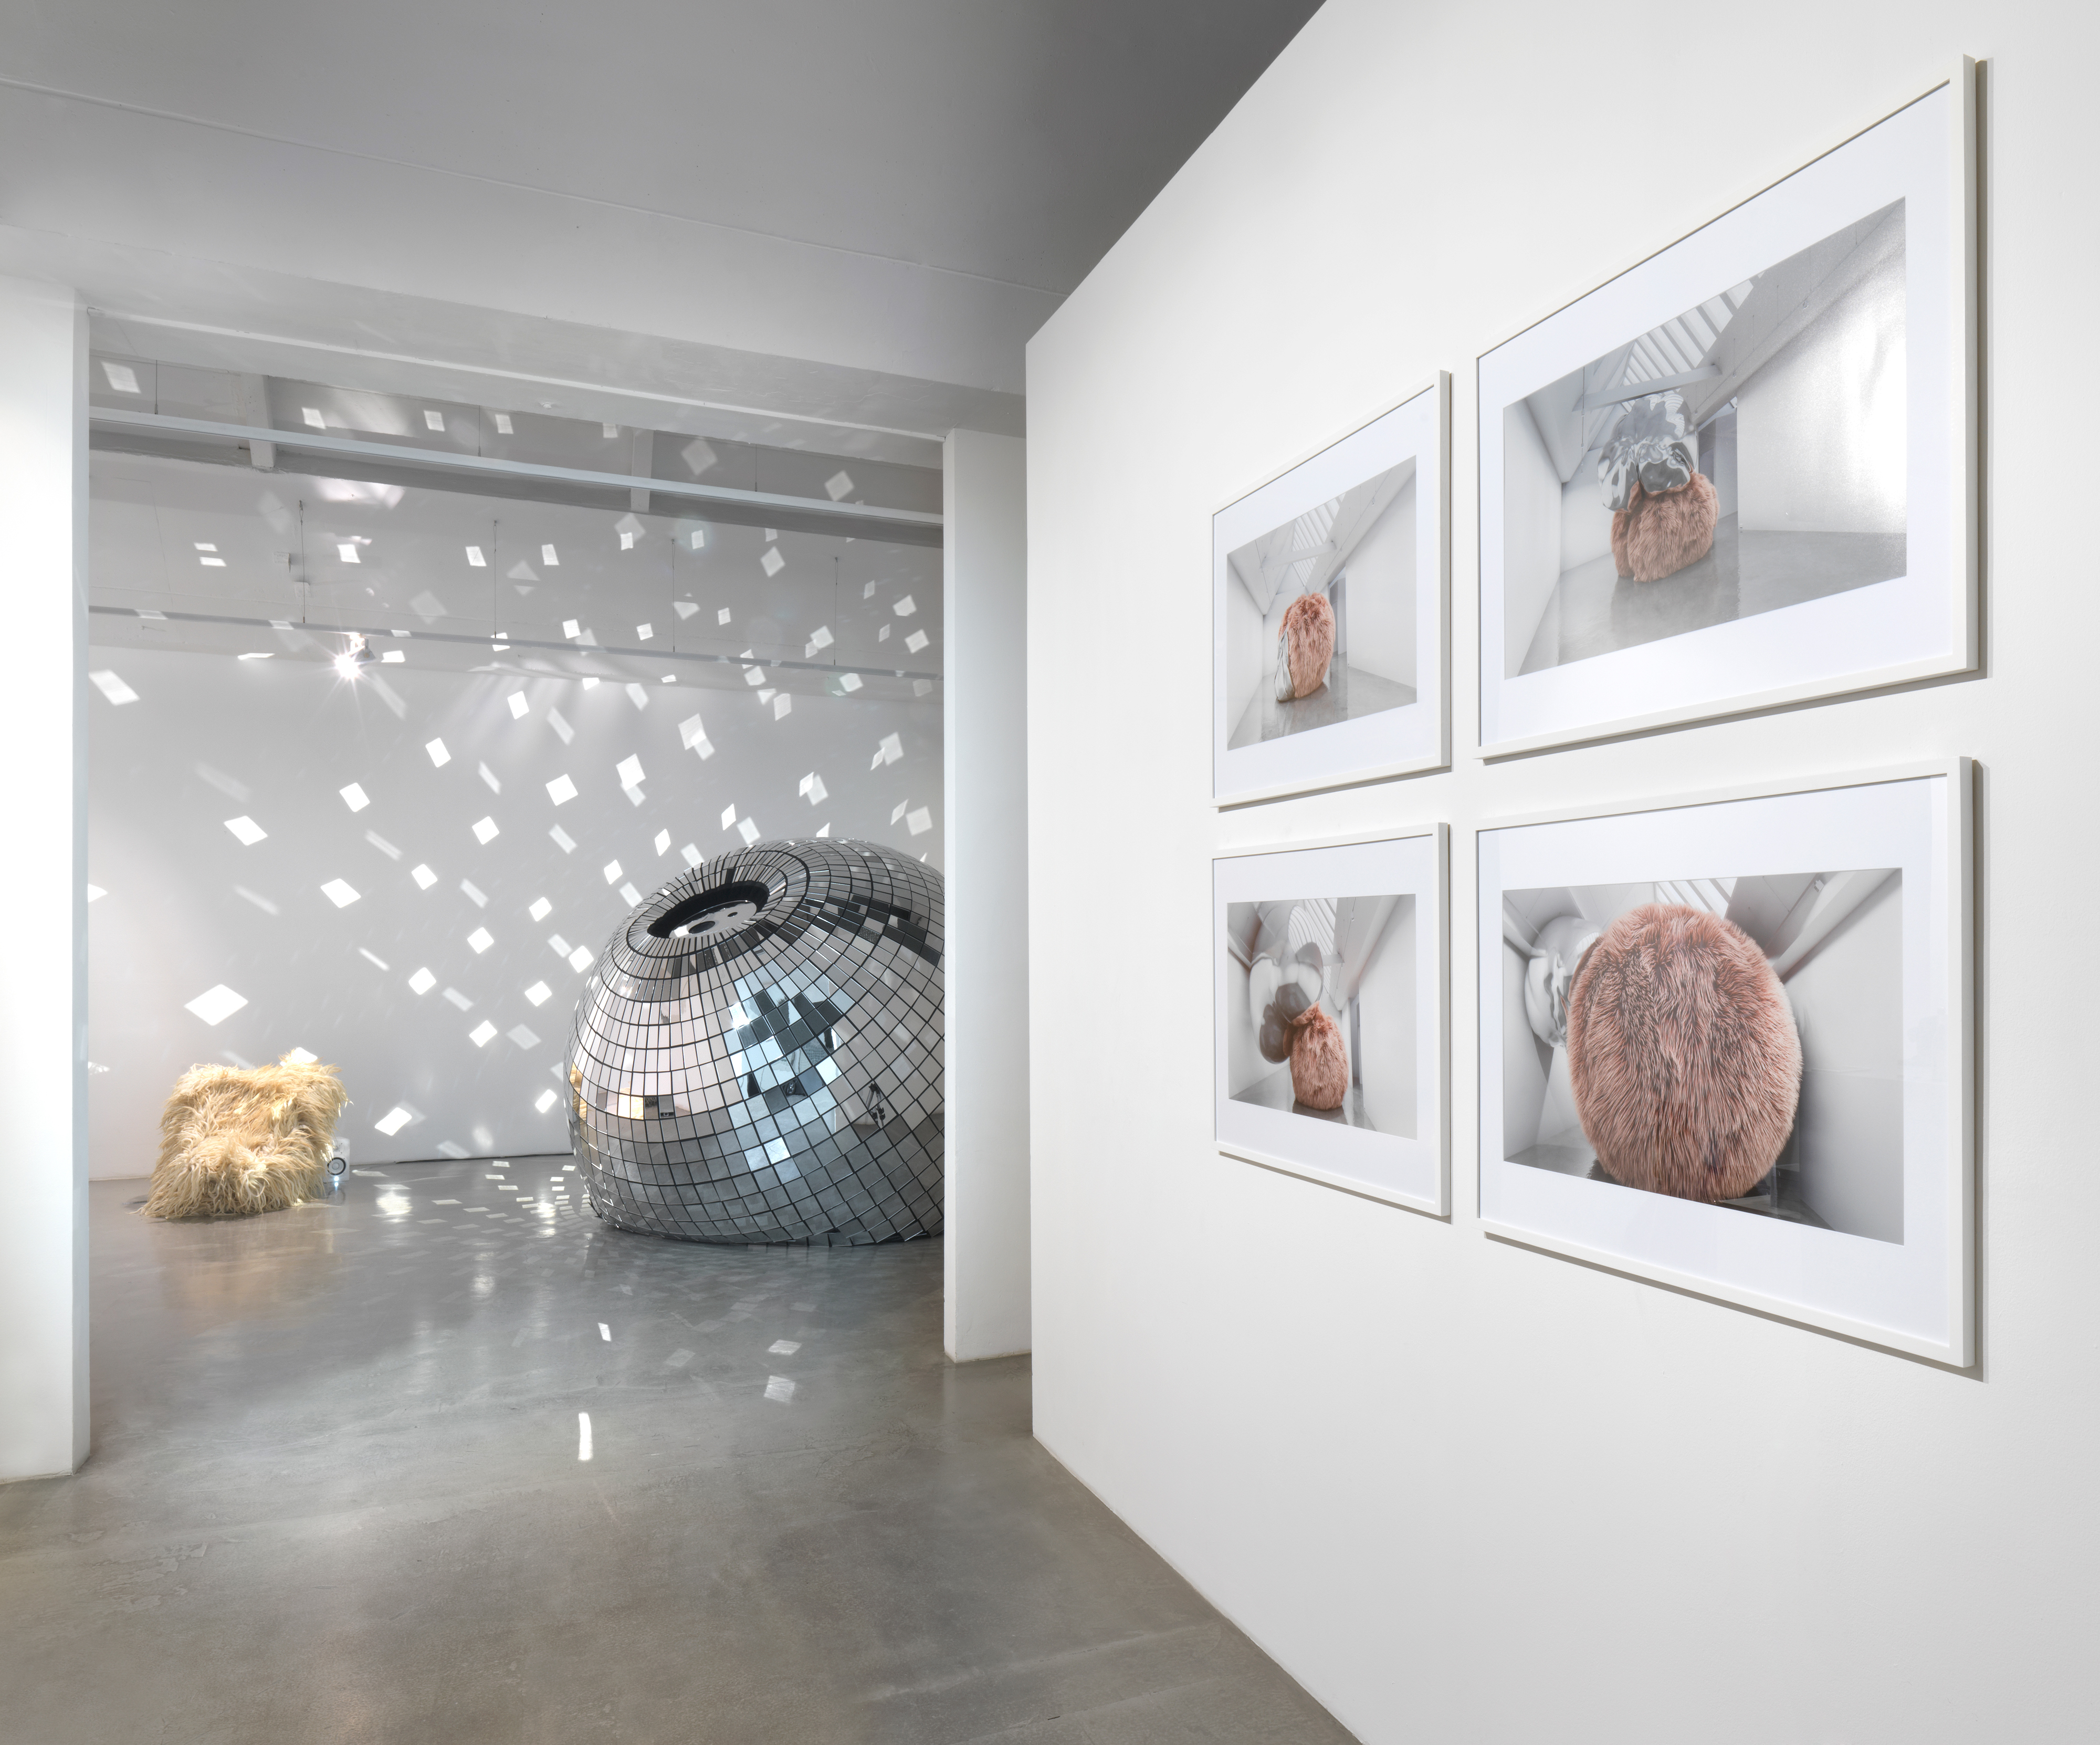 Galerie Barbara Thumm \ Exhibitions